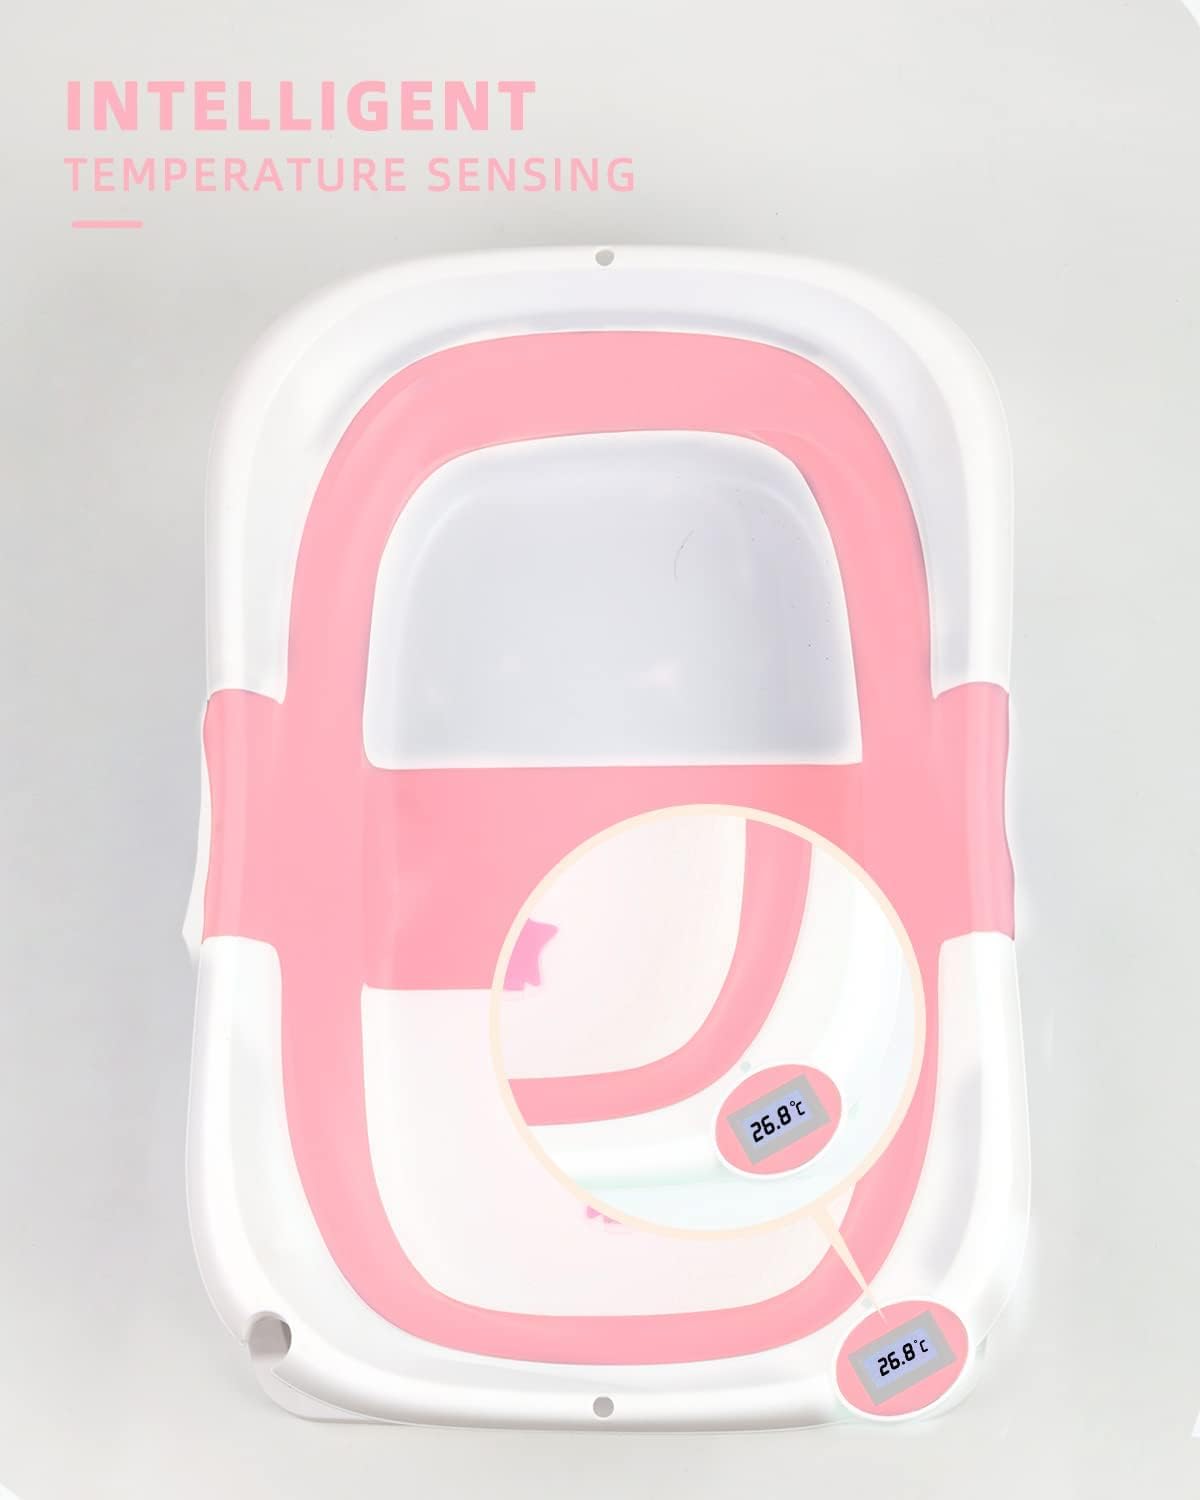 Baby Bath Tub Foldable, Pink White